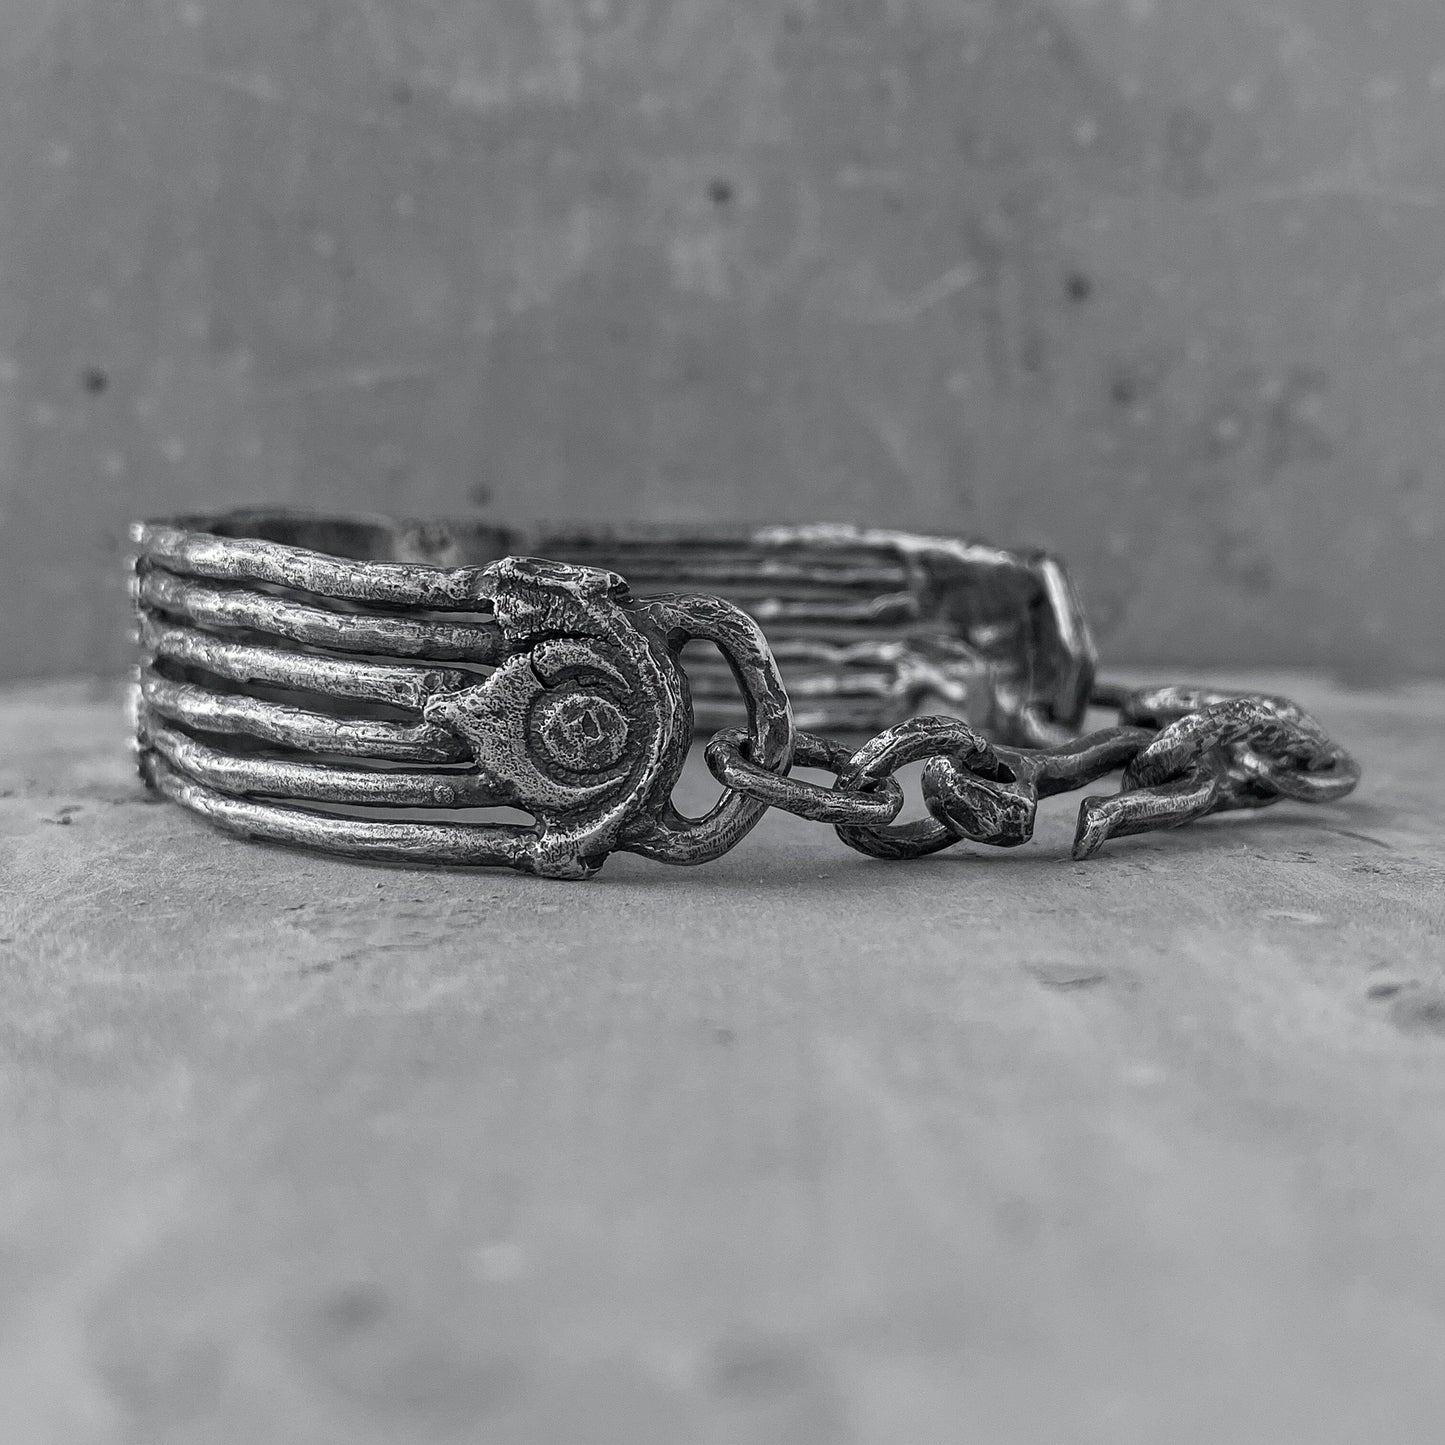 Tethys bracelet- combined ruinistic bracelet with ancient elements, patterns and cracks Bracelets Project50g 